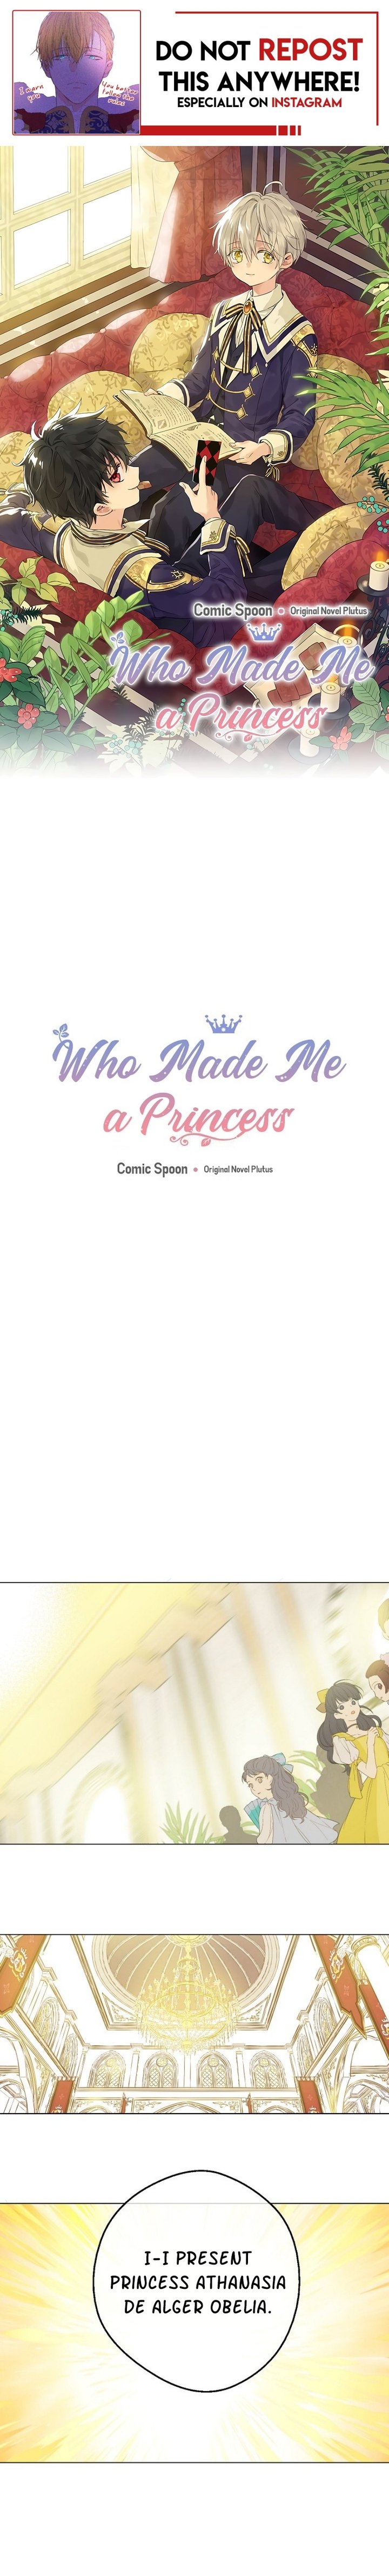 Who Made Me a Princess - Chapter 51 Page 1